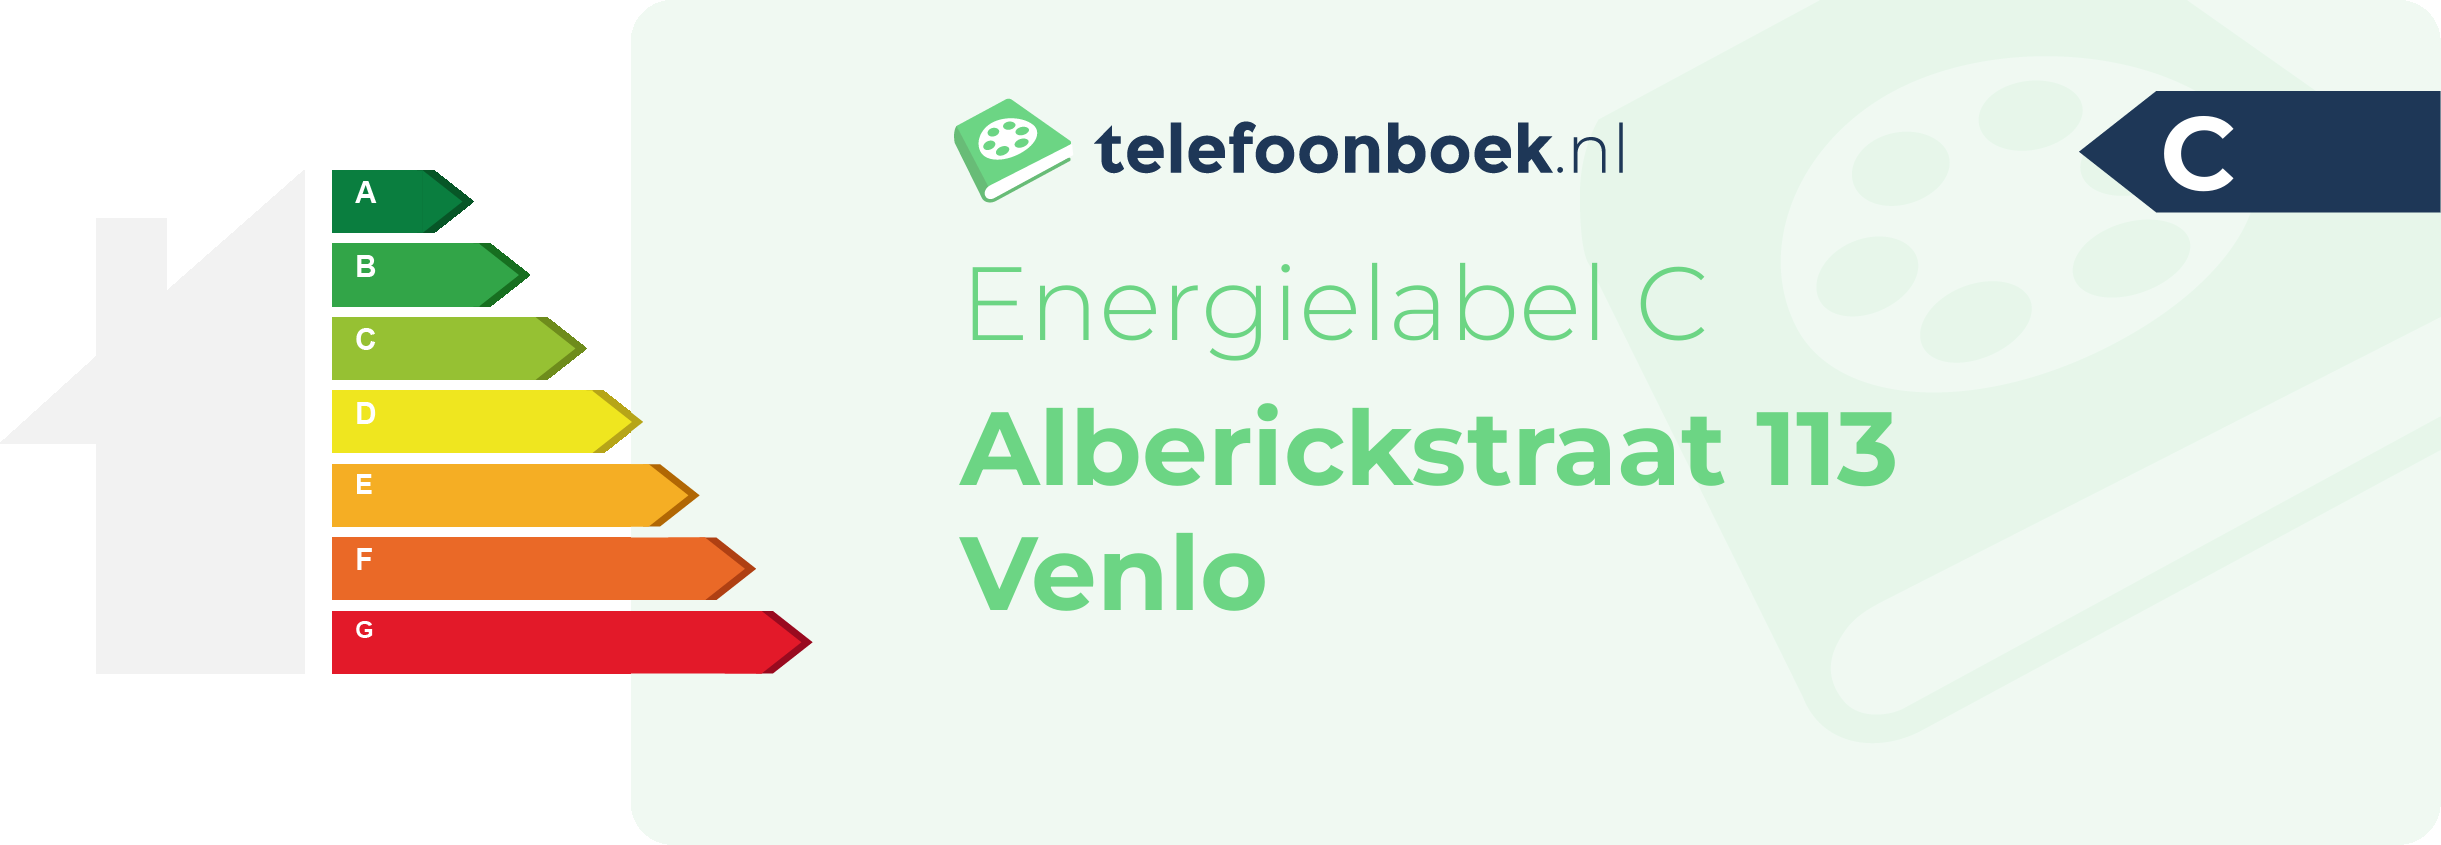 Energielabel Alberickstraat 113 Venlo